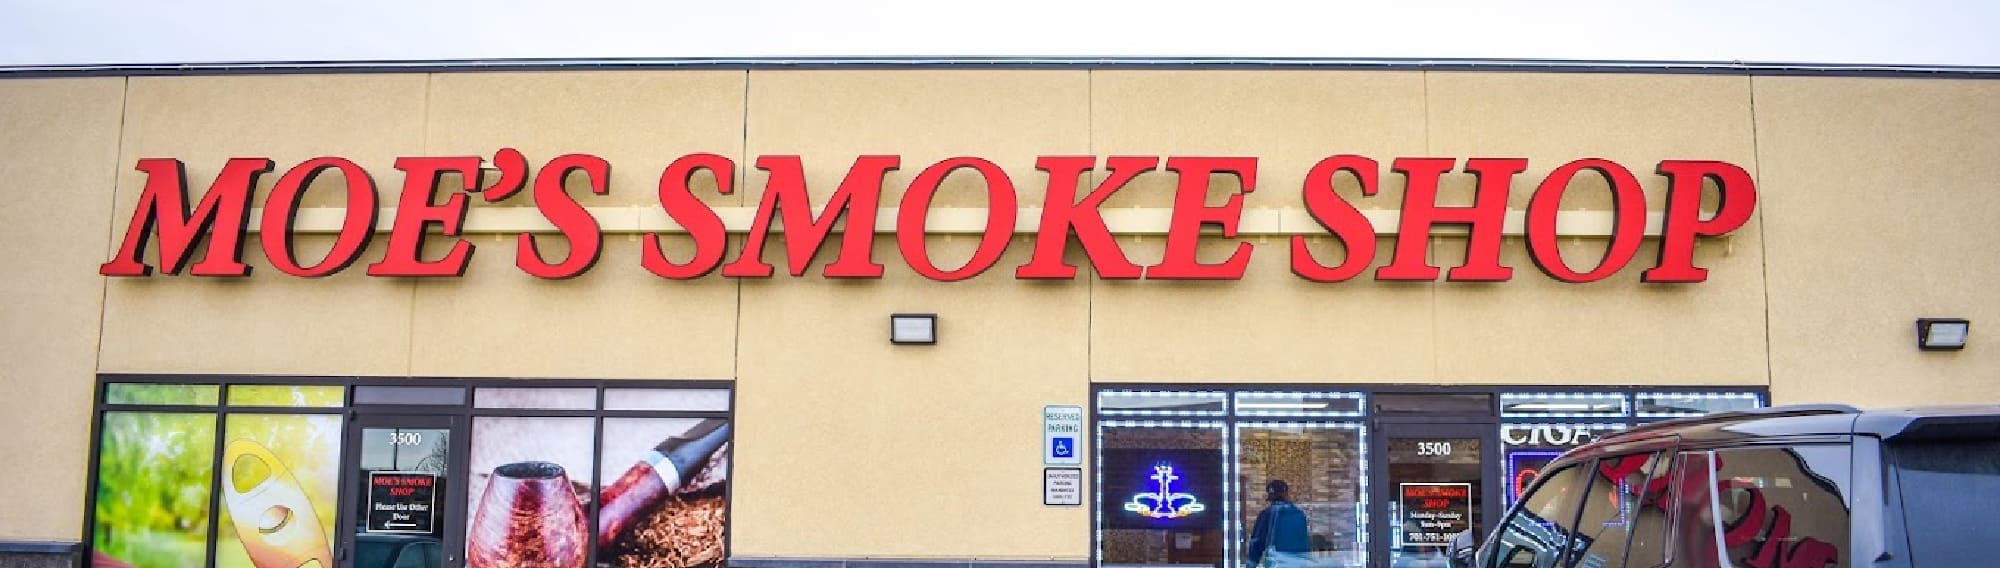 image of moes smoke shop in bismark nd